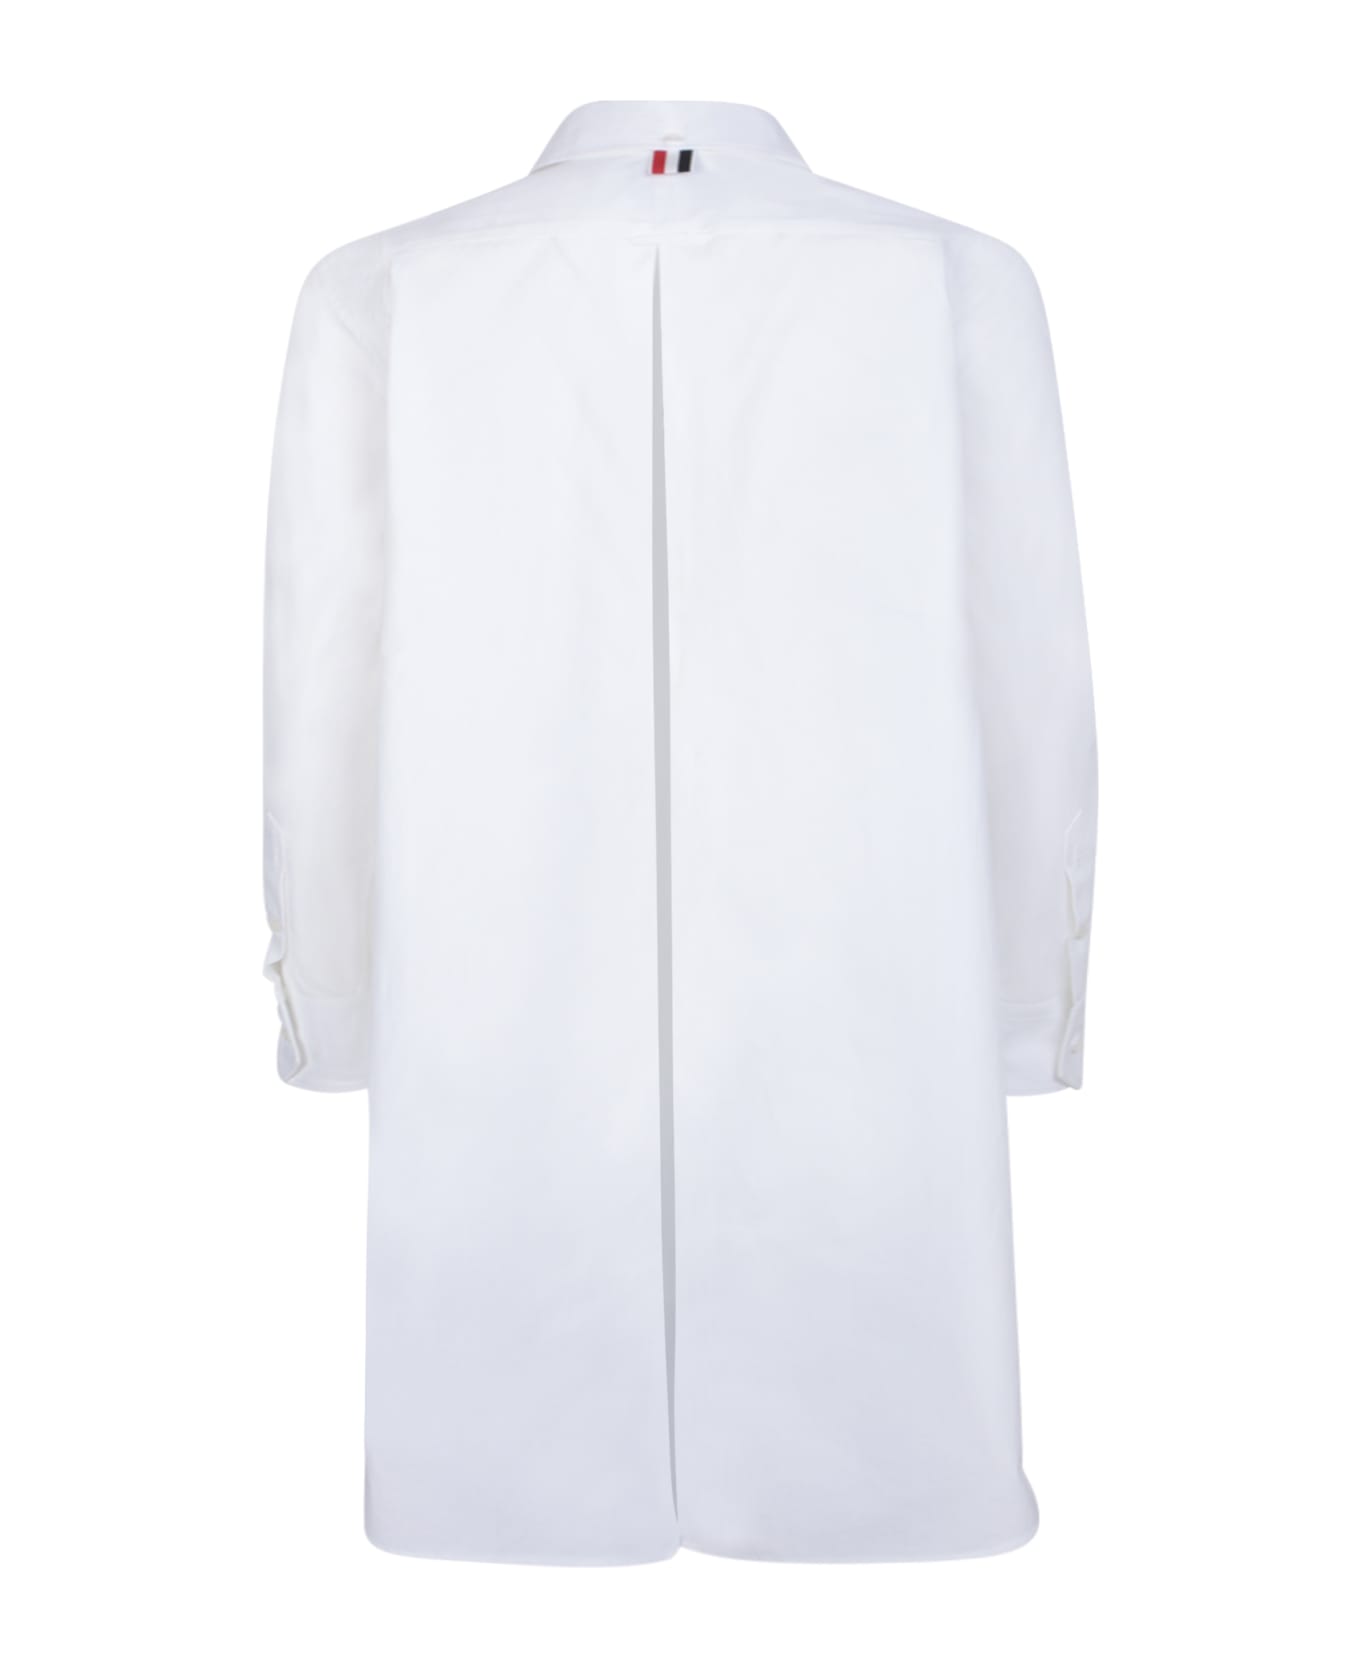 Thom Browne Shirt In White Cotton - White